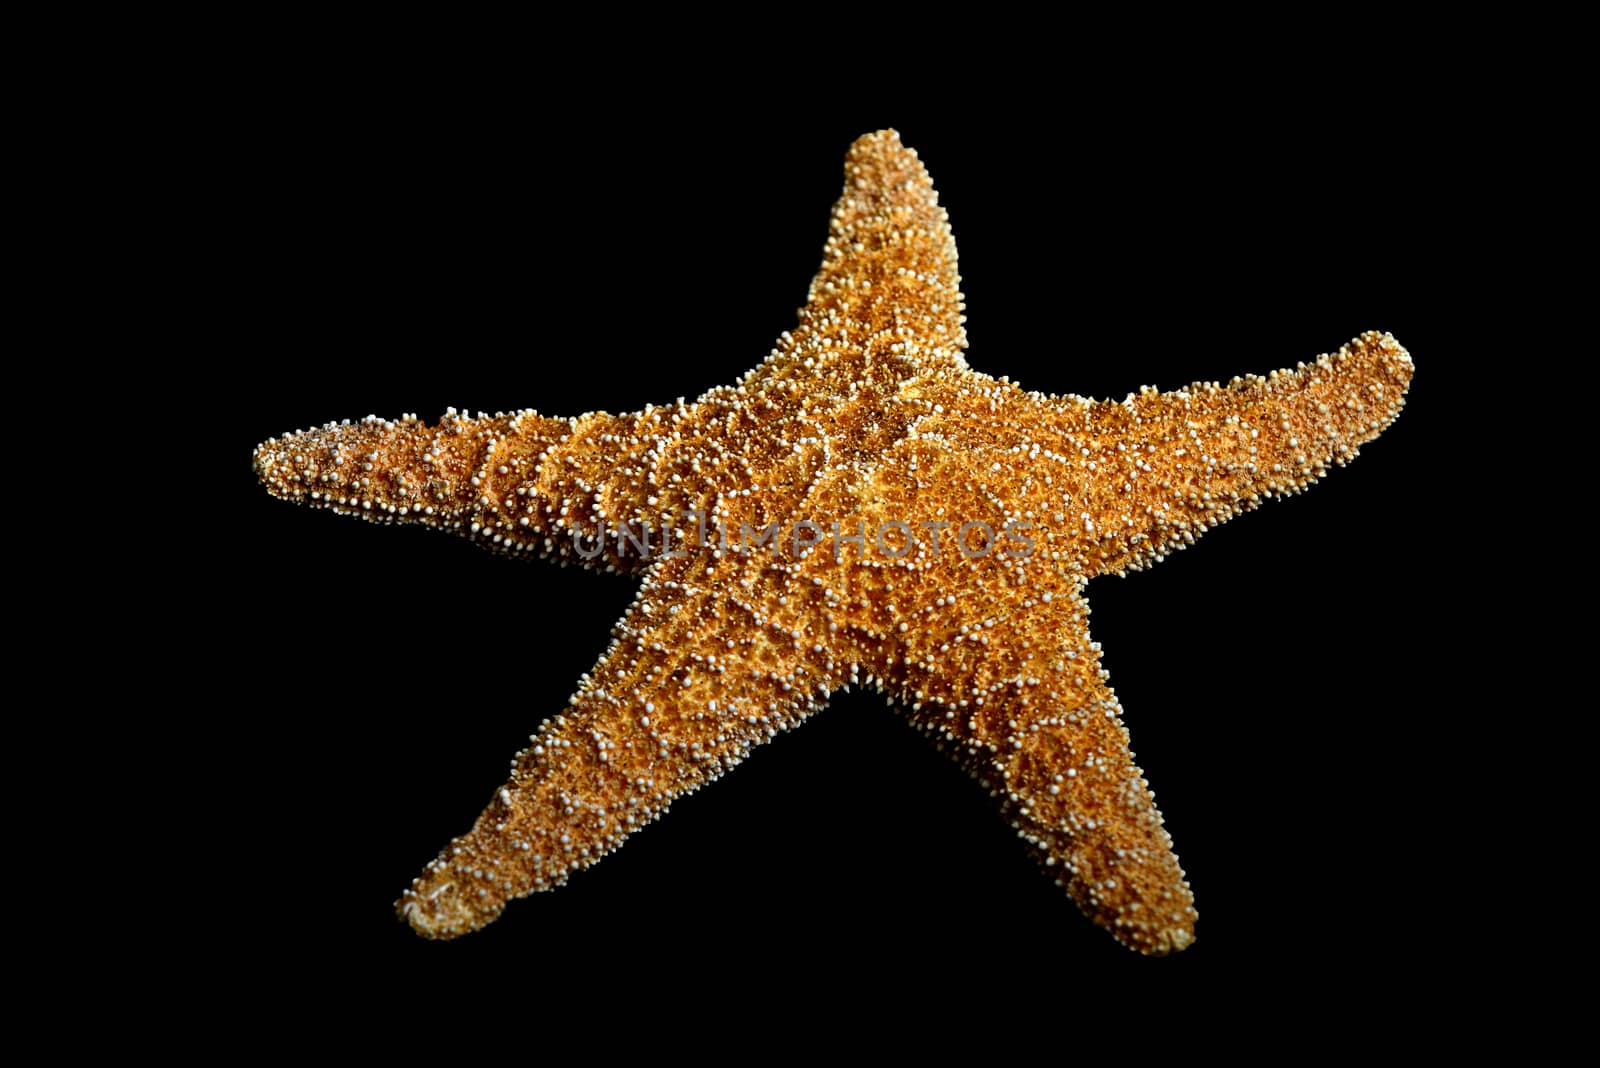 starfish on black by ftlaudgirl